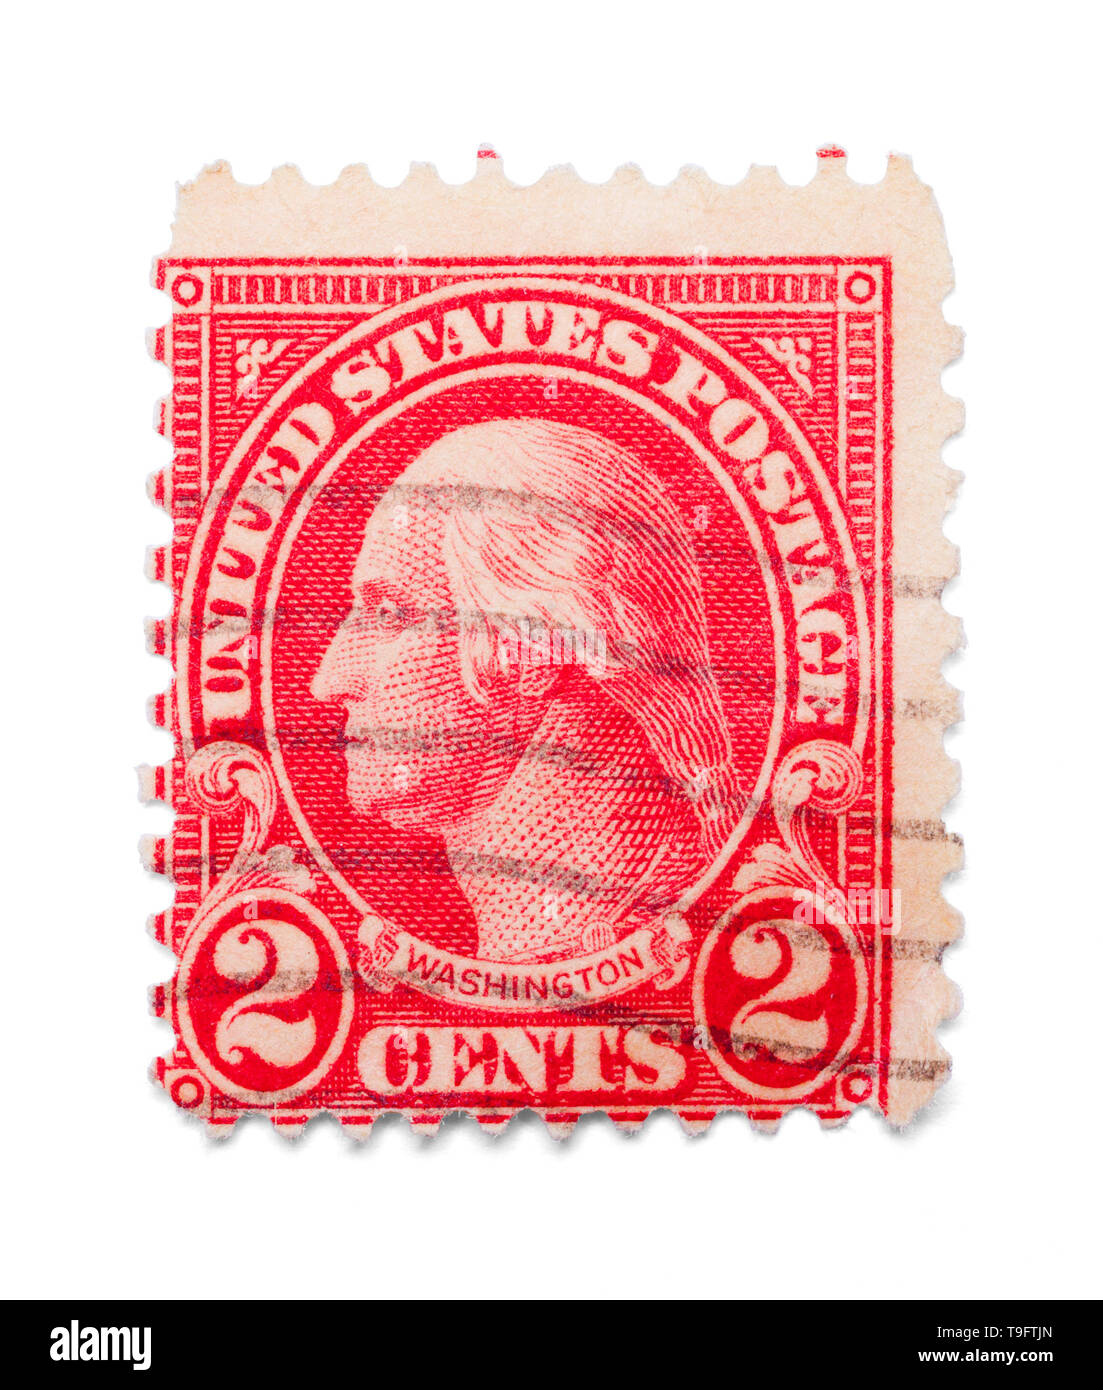 Red George Washington Postage Stamp Isolated on White. Stock Photo